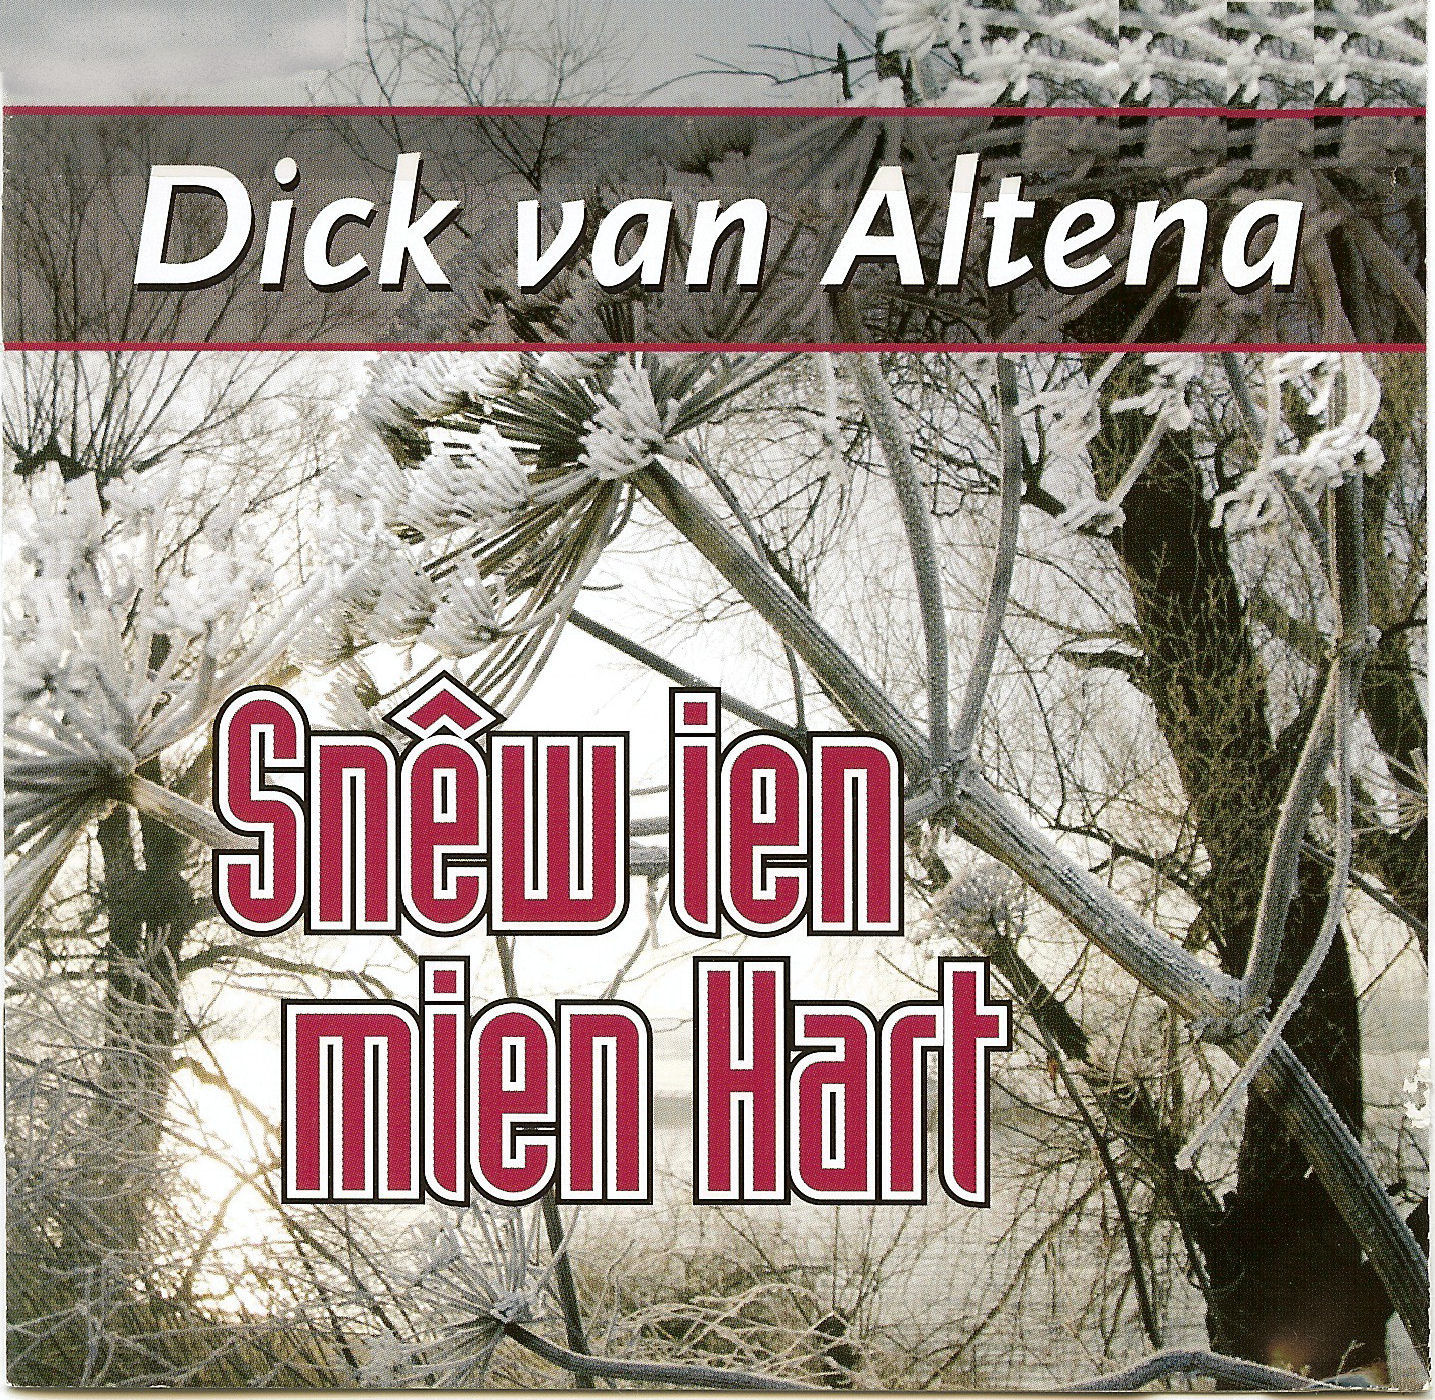 Dick van Altena & Major Dundee (Band) - Collection